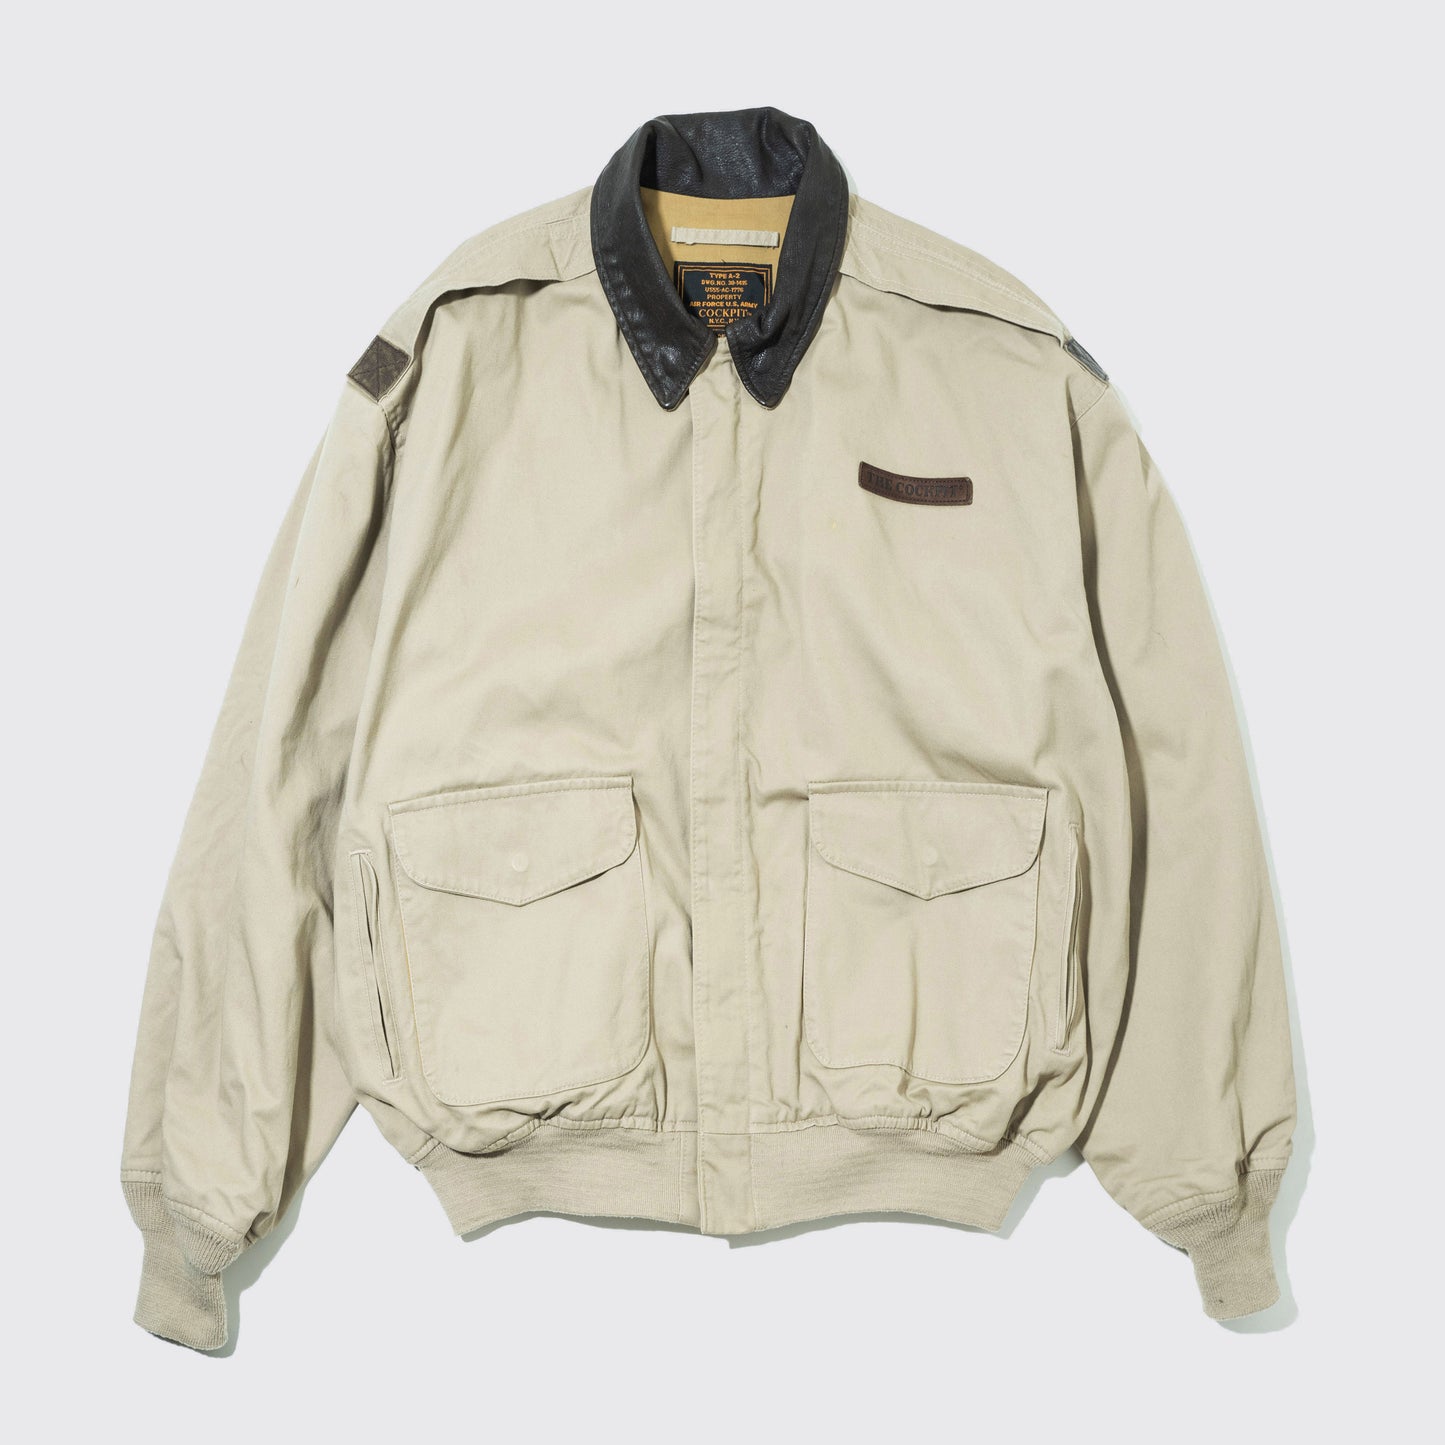 vintage loose type a-2 aviator jacket